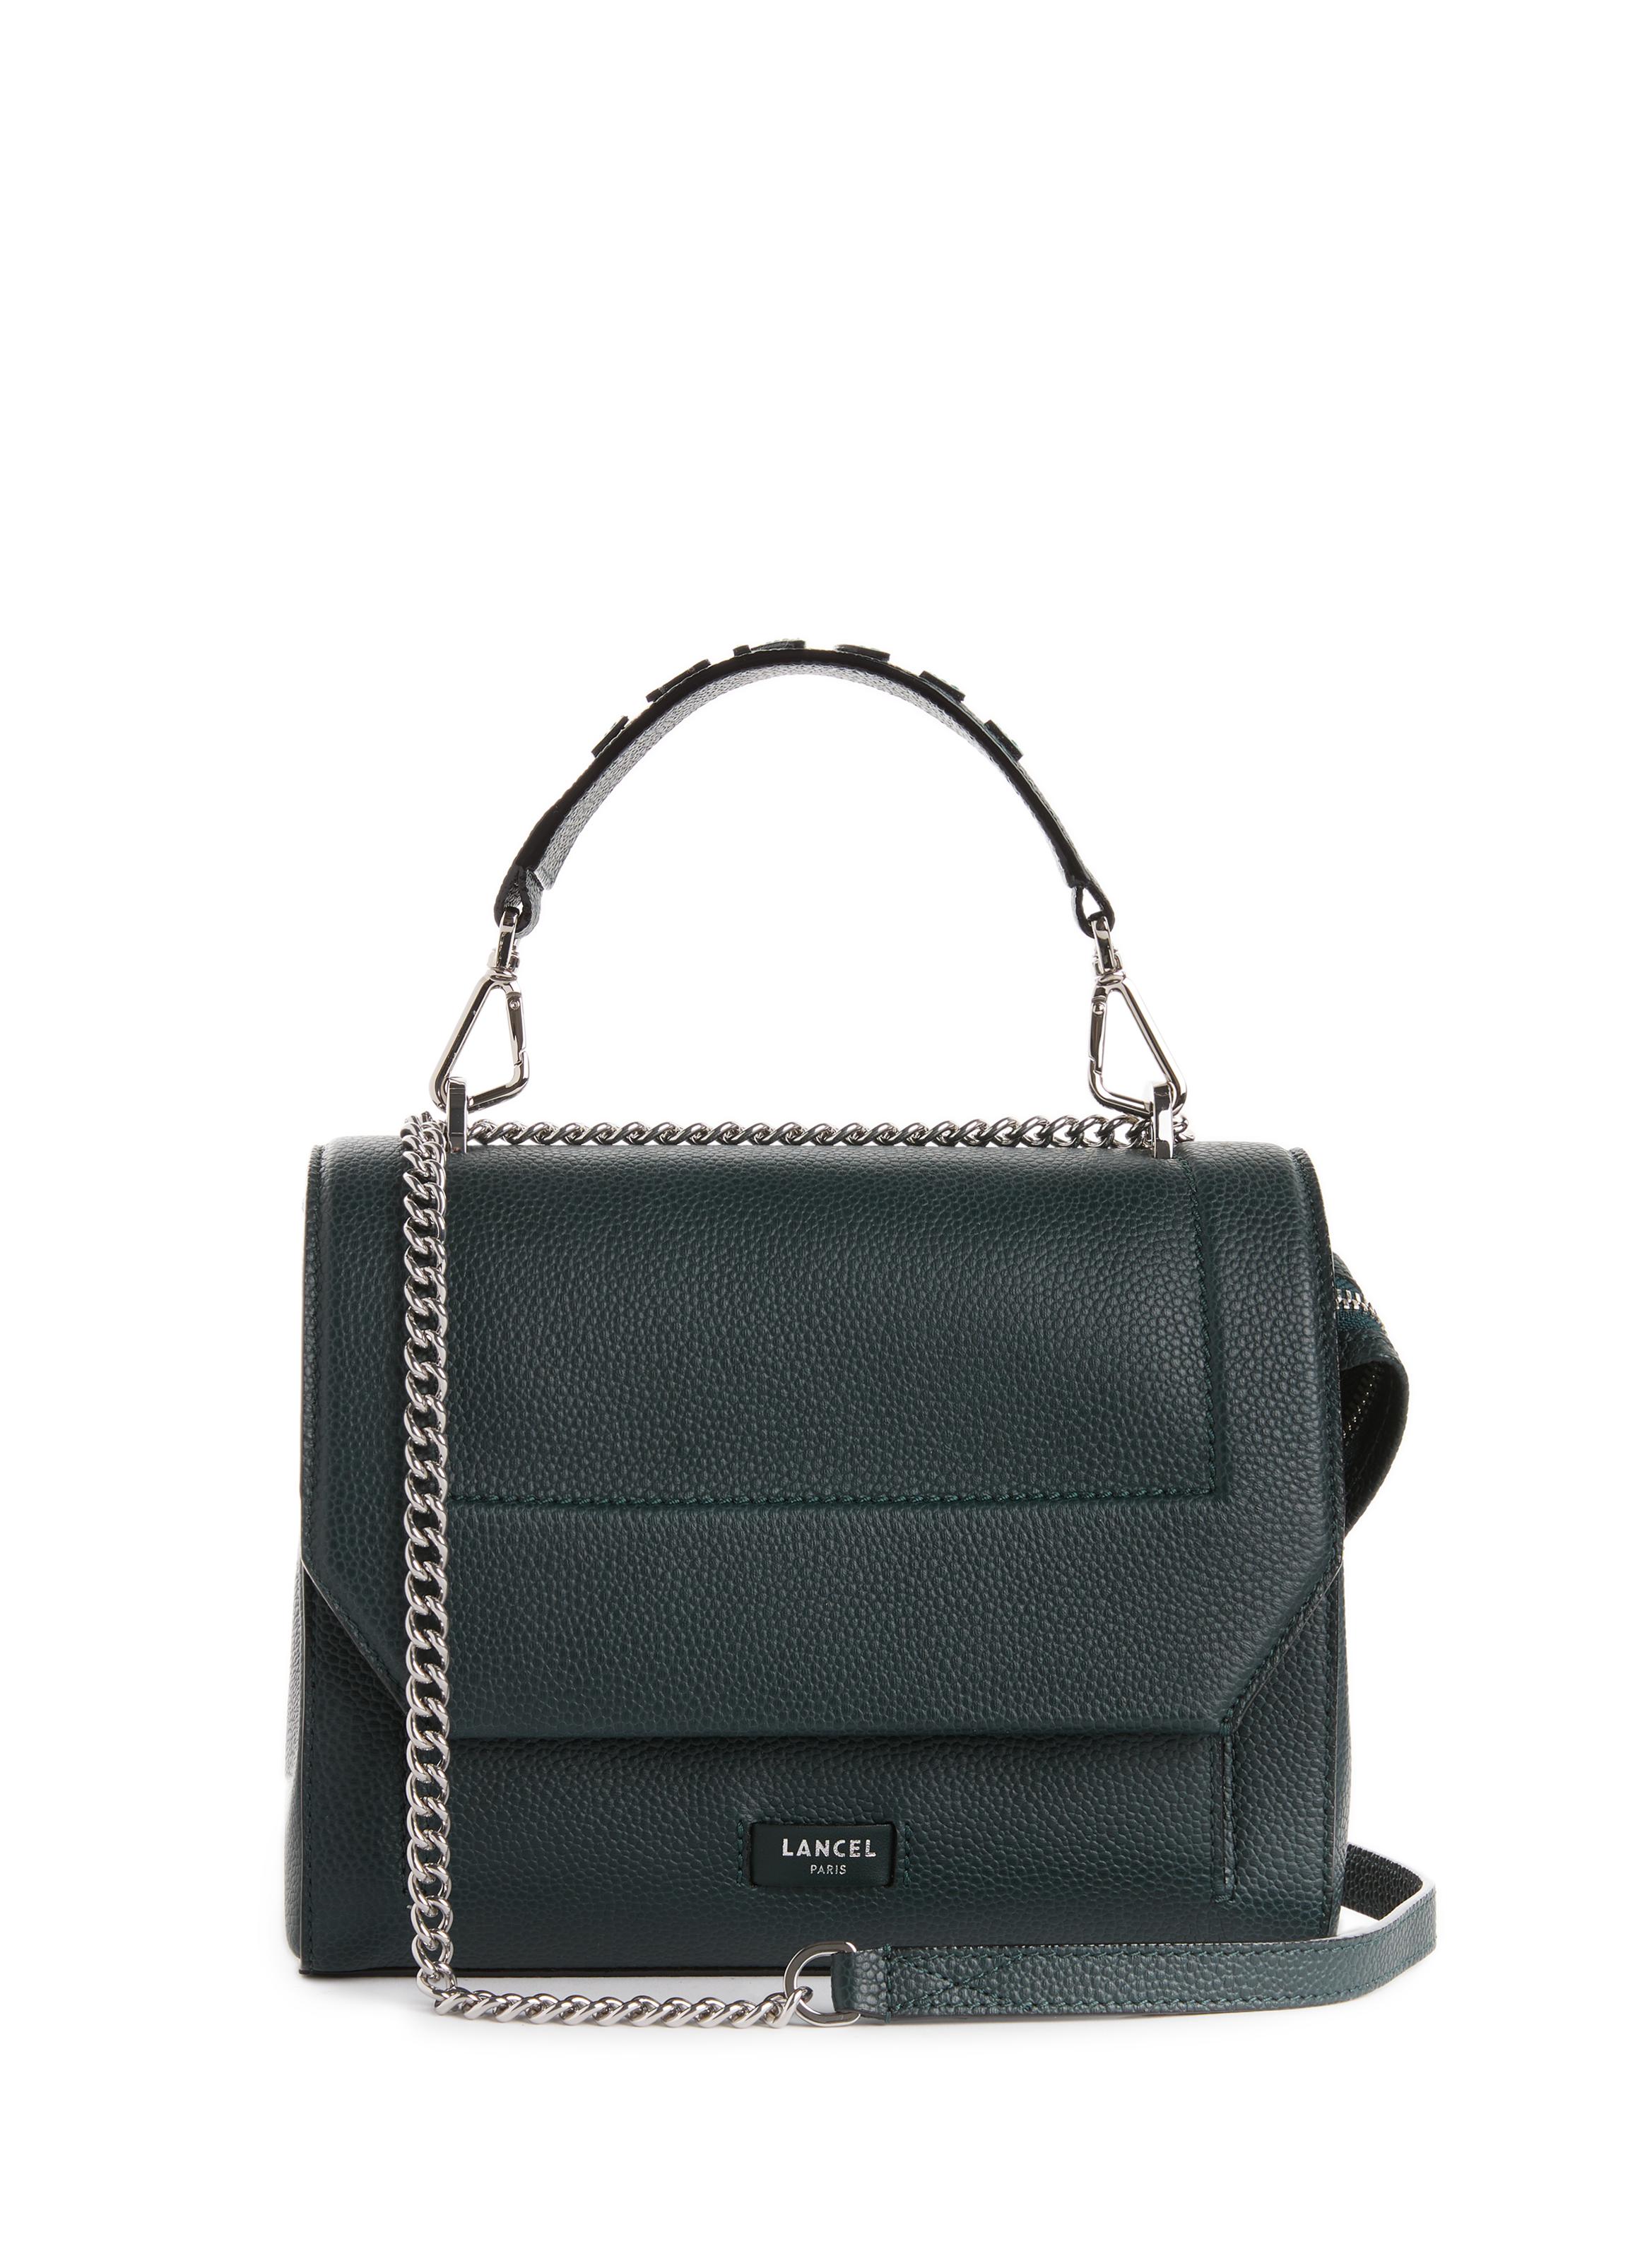 Ninon Leather Handbag